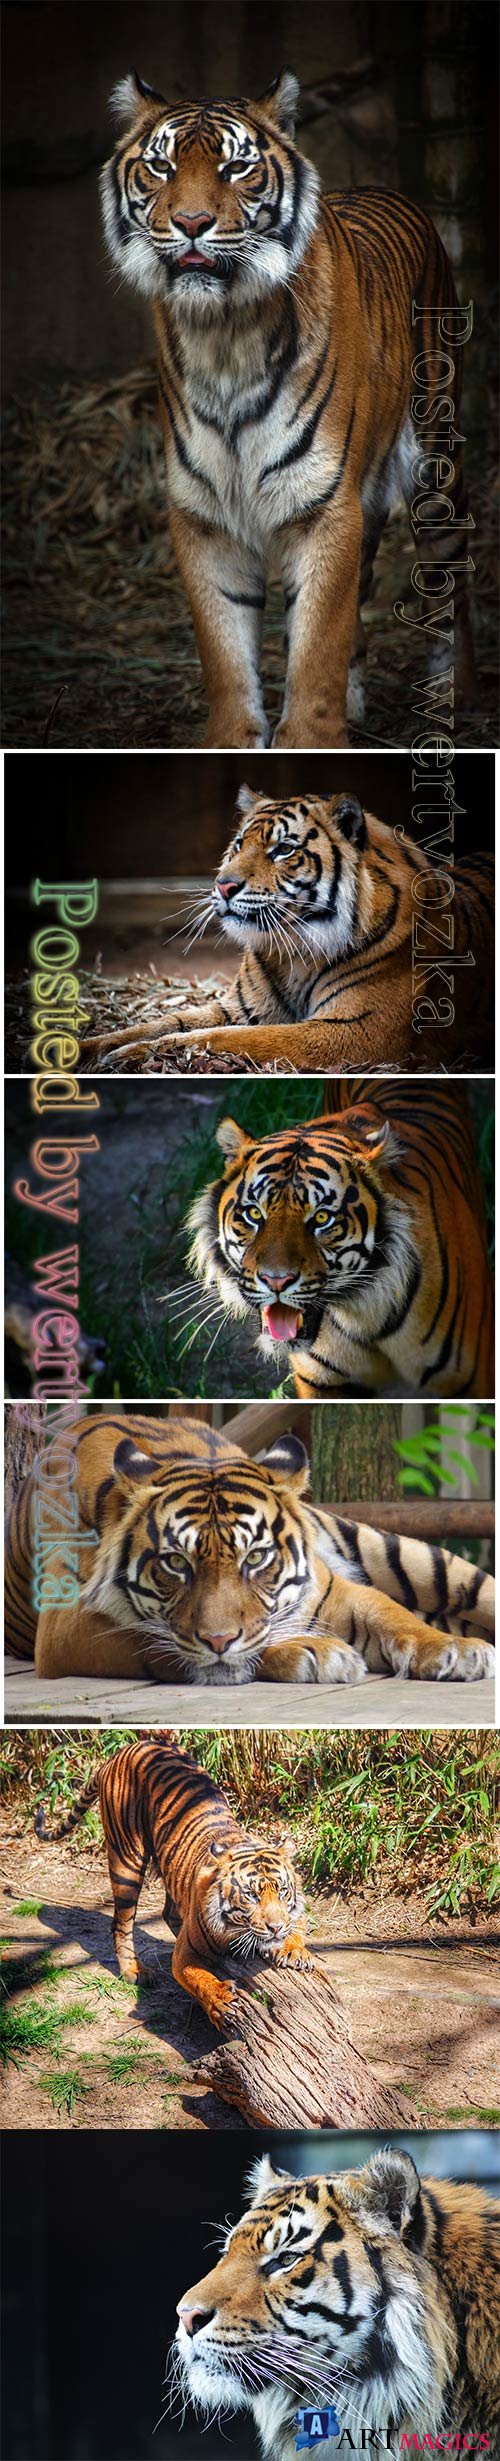 Tiger beautiful stock photo